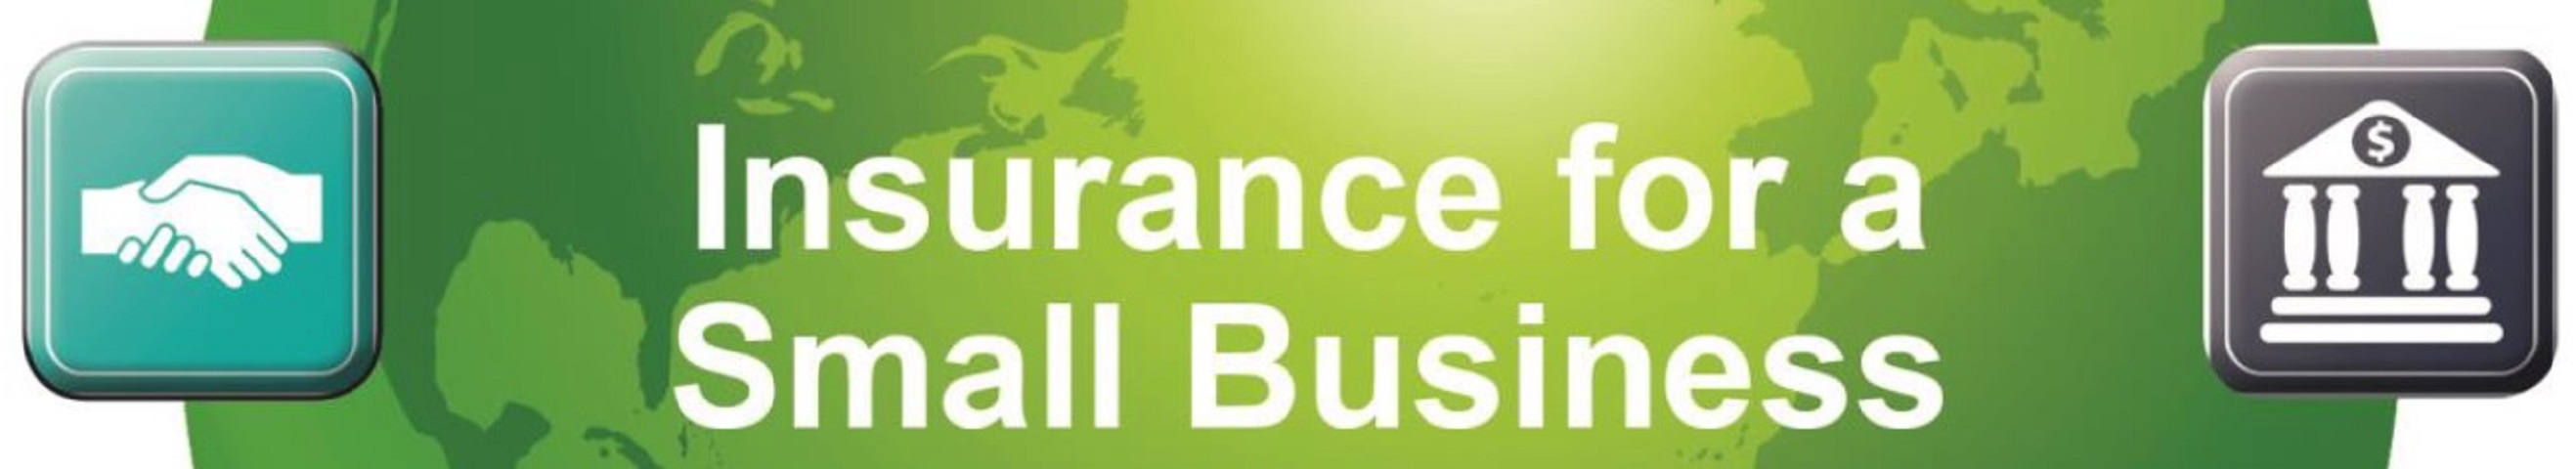 Business Insurance Explained